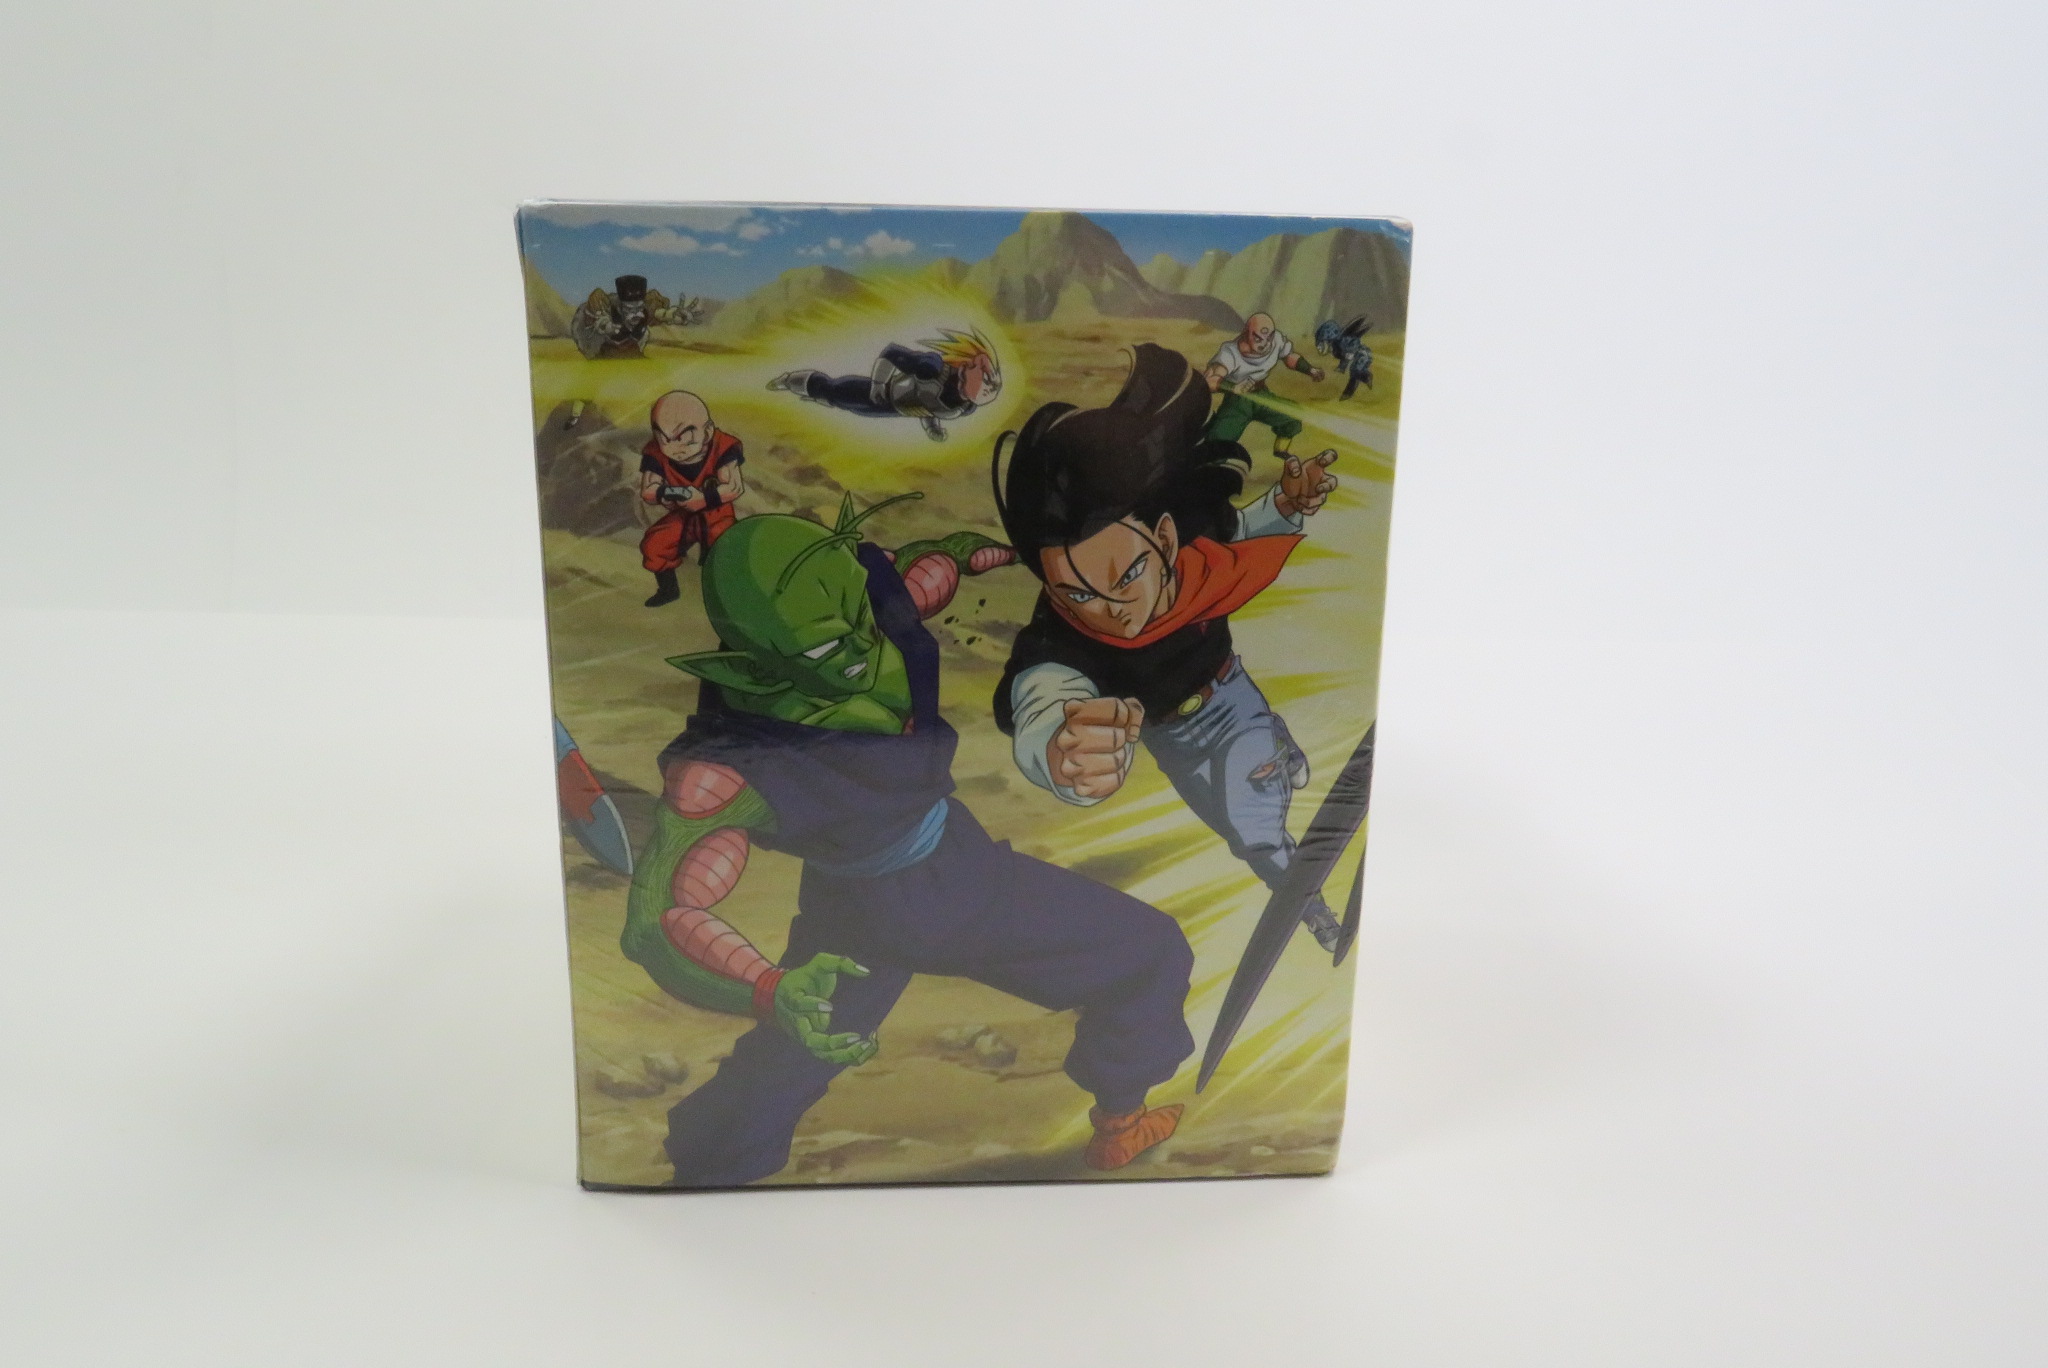  Dragonball Z Complete Seasons 1-9 Box sets (9 Box Sets